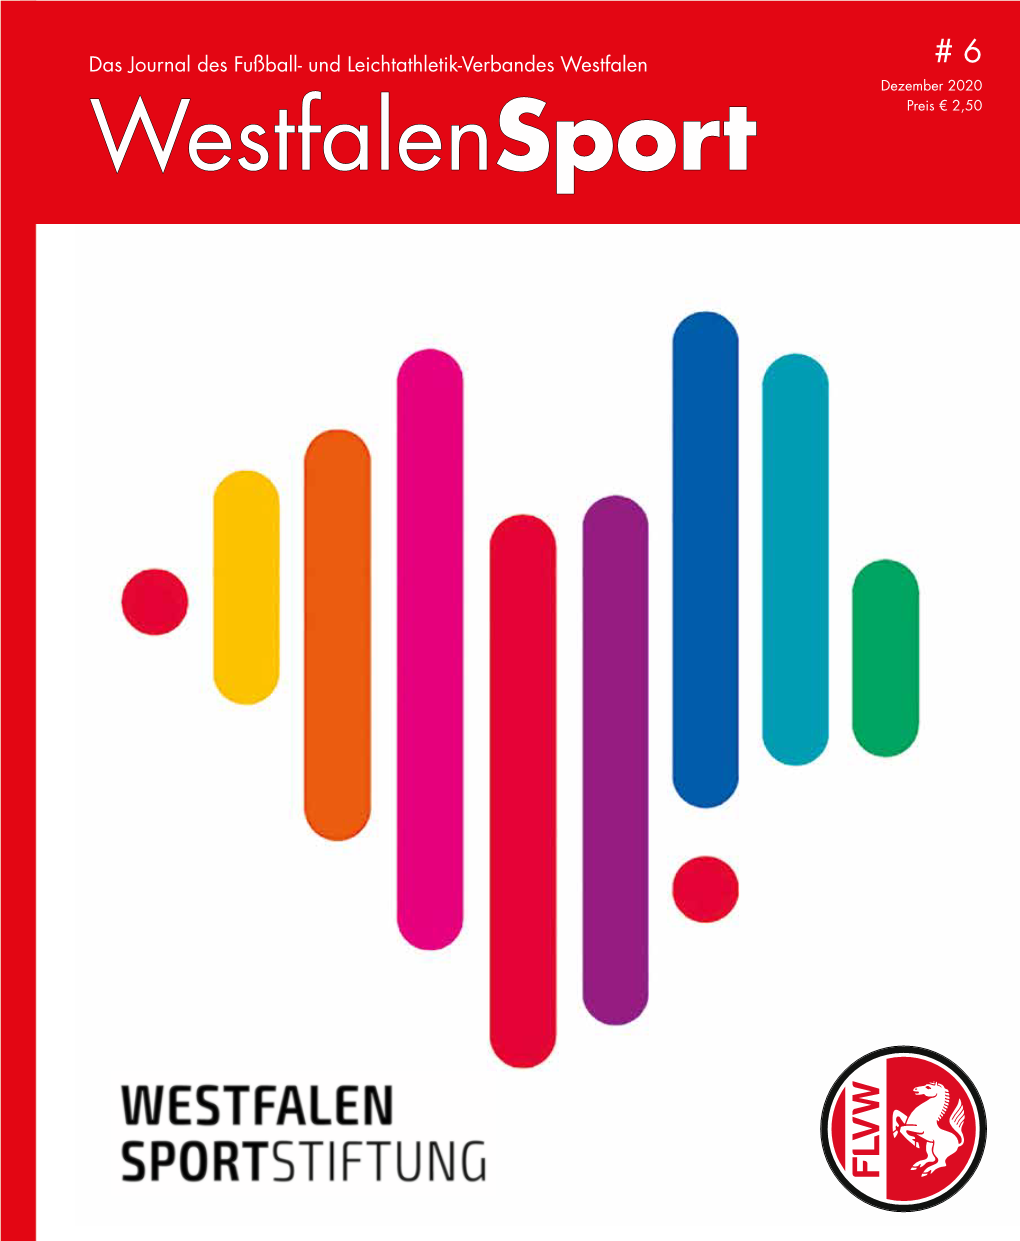 Westfalensport Preis € 2,50 Editorial